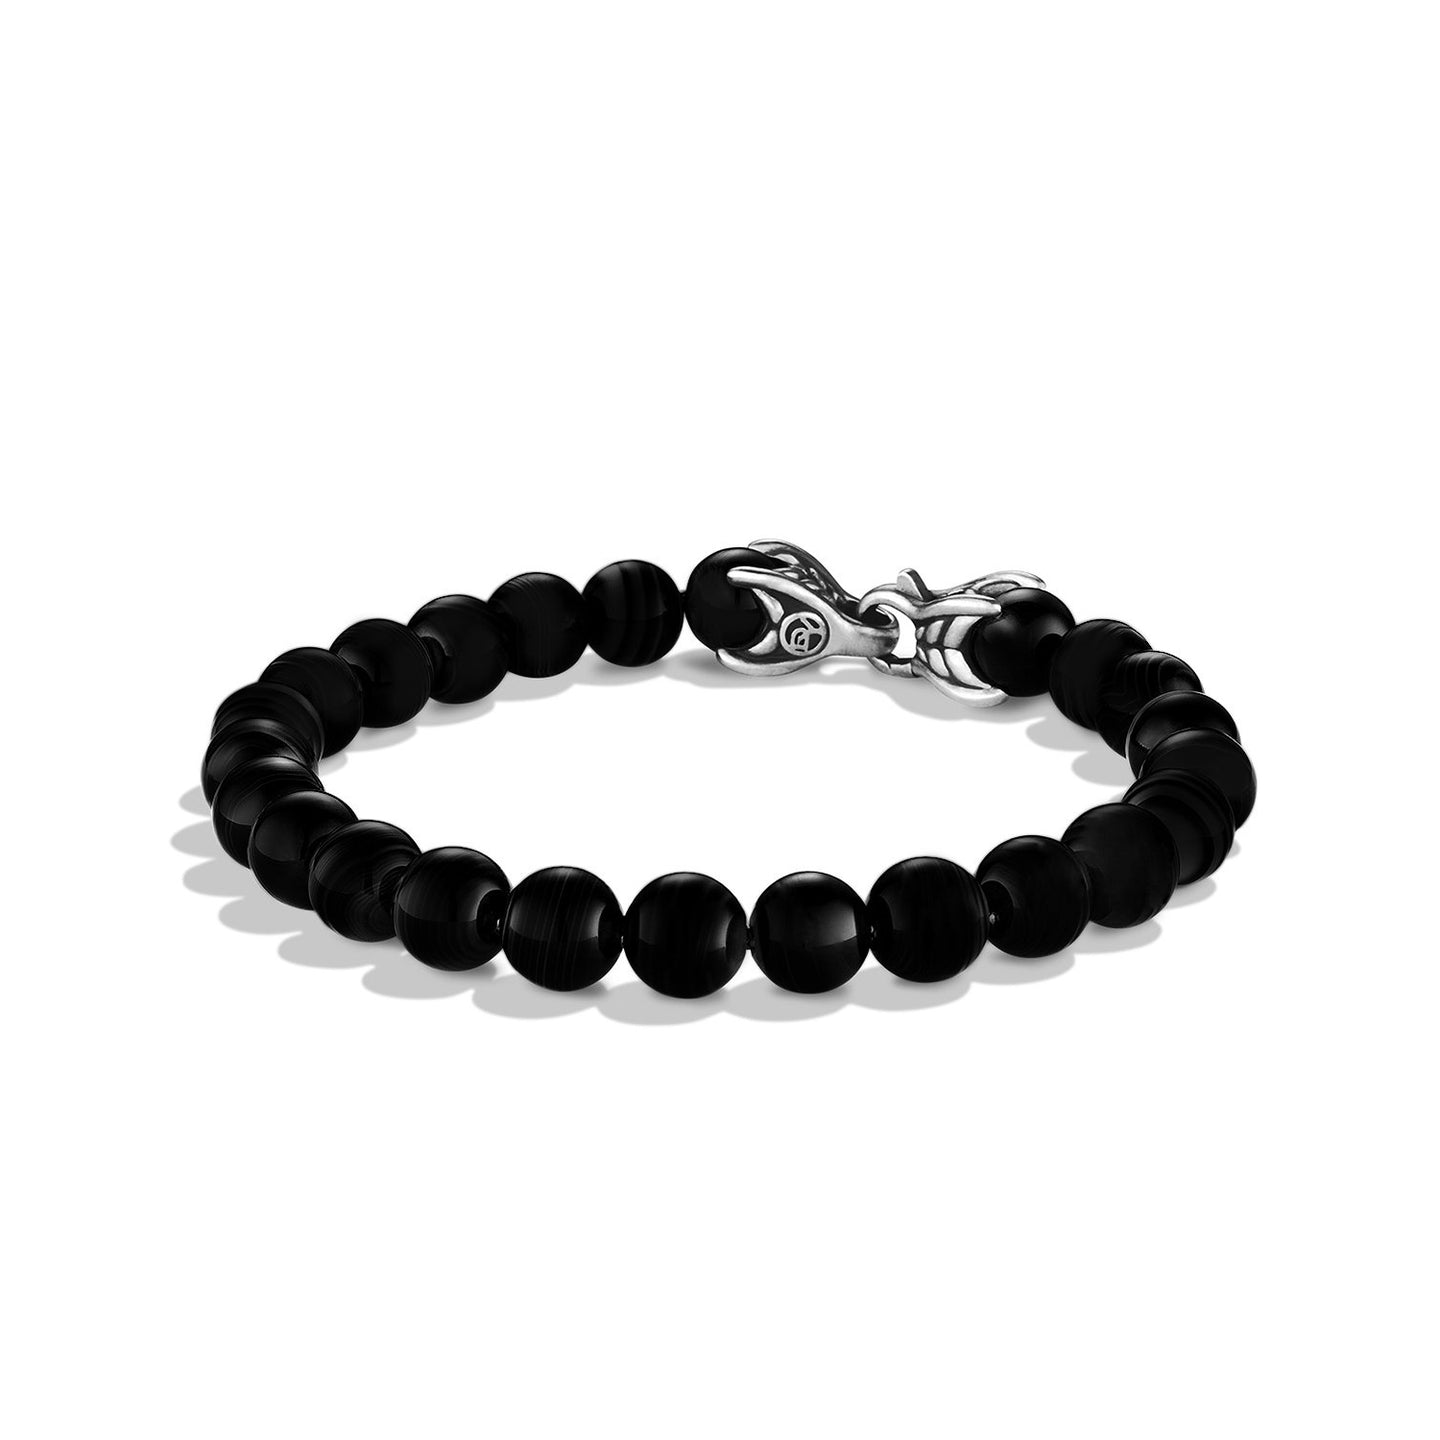 Spiritual Beads Bracelet with Black Onyx, 8.5